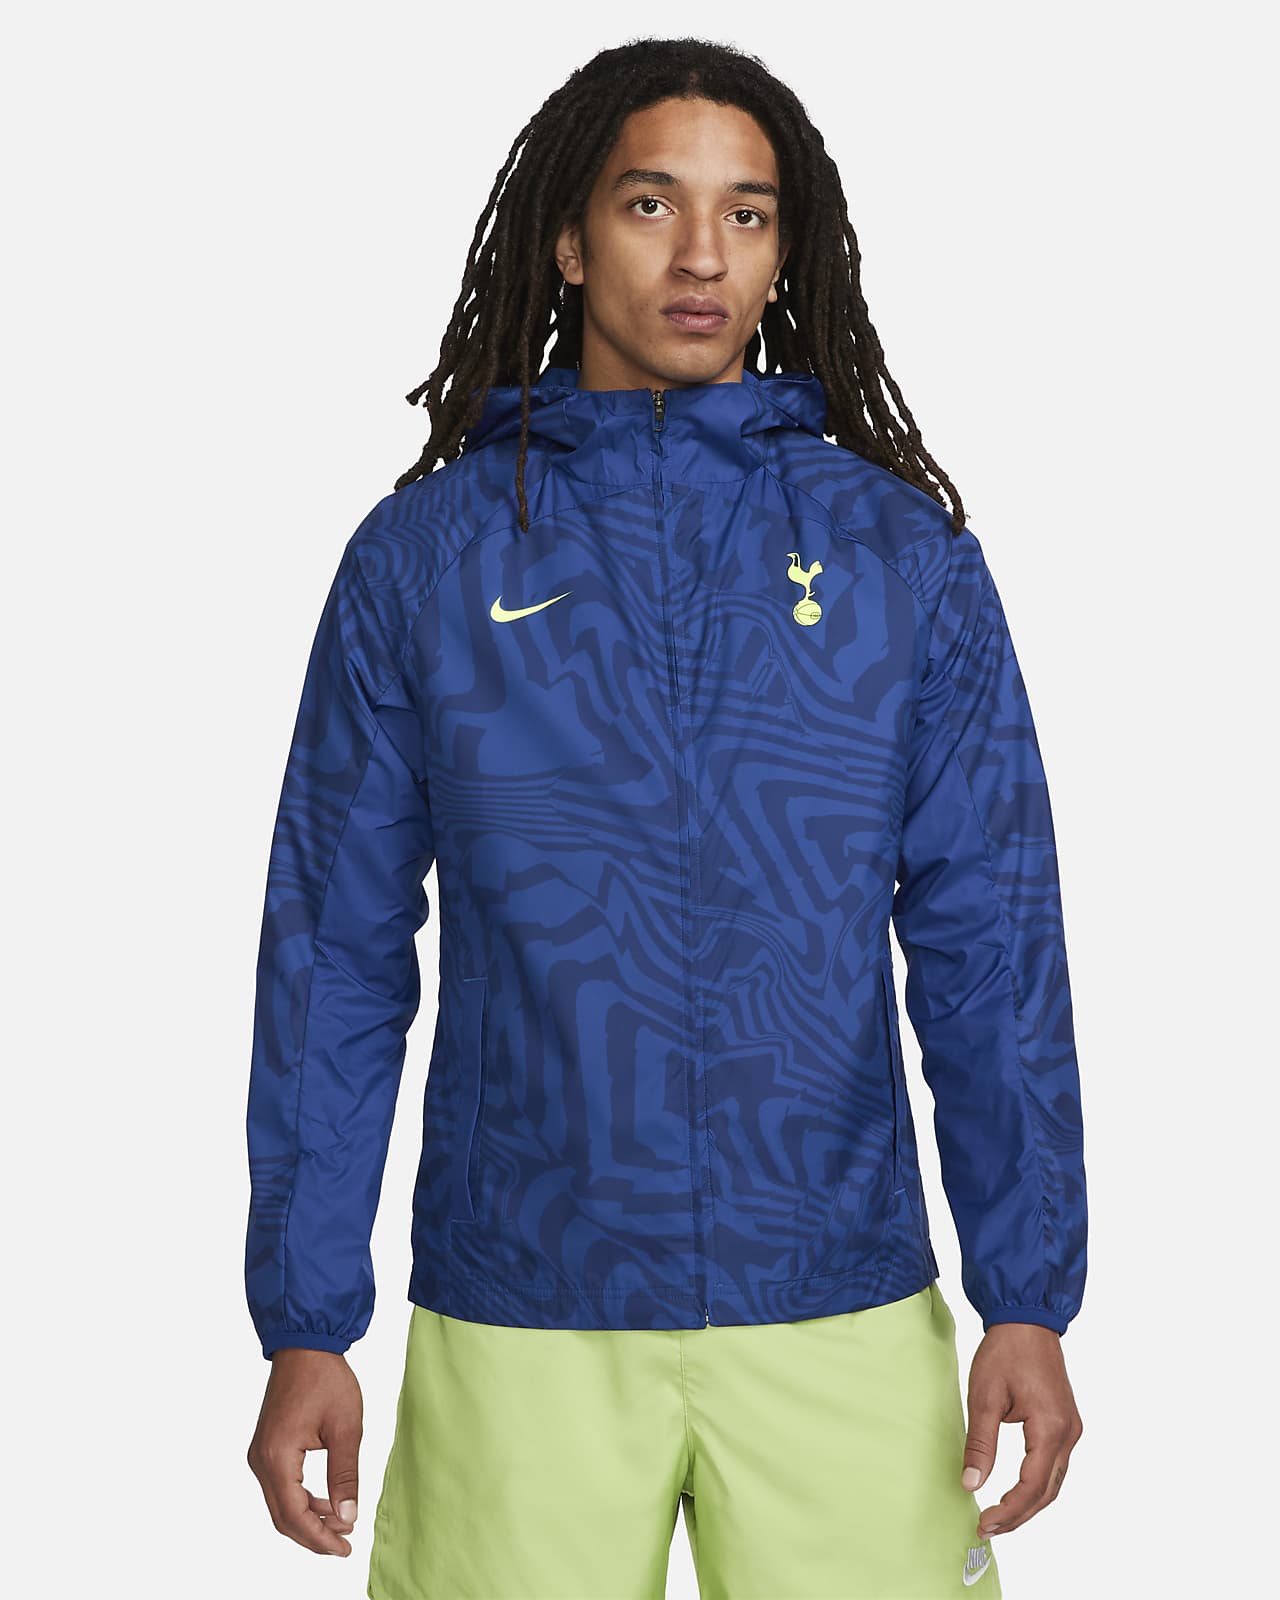 Tottenham Hotspur AWF Men's Soccer Jacket.